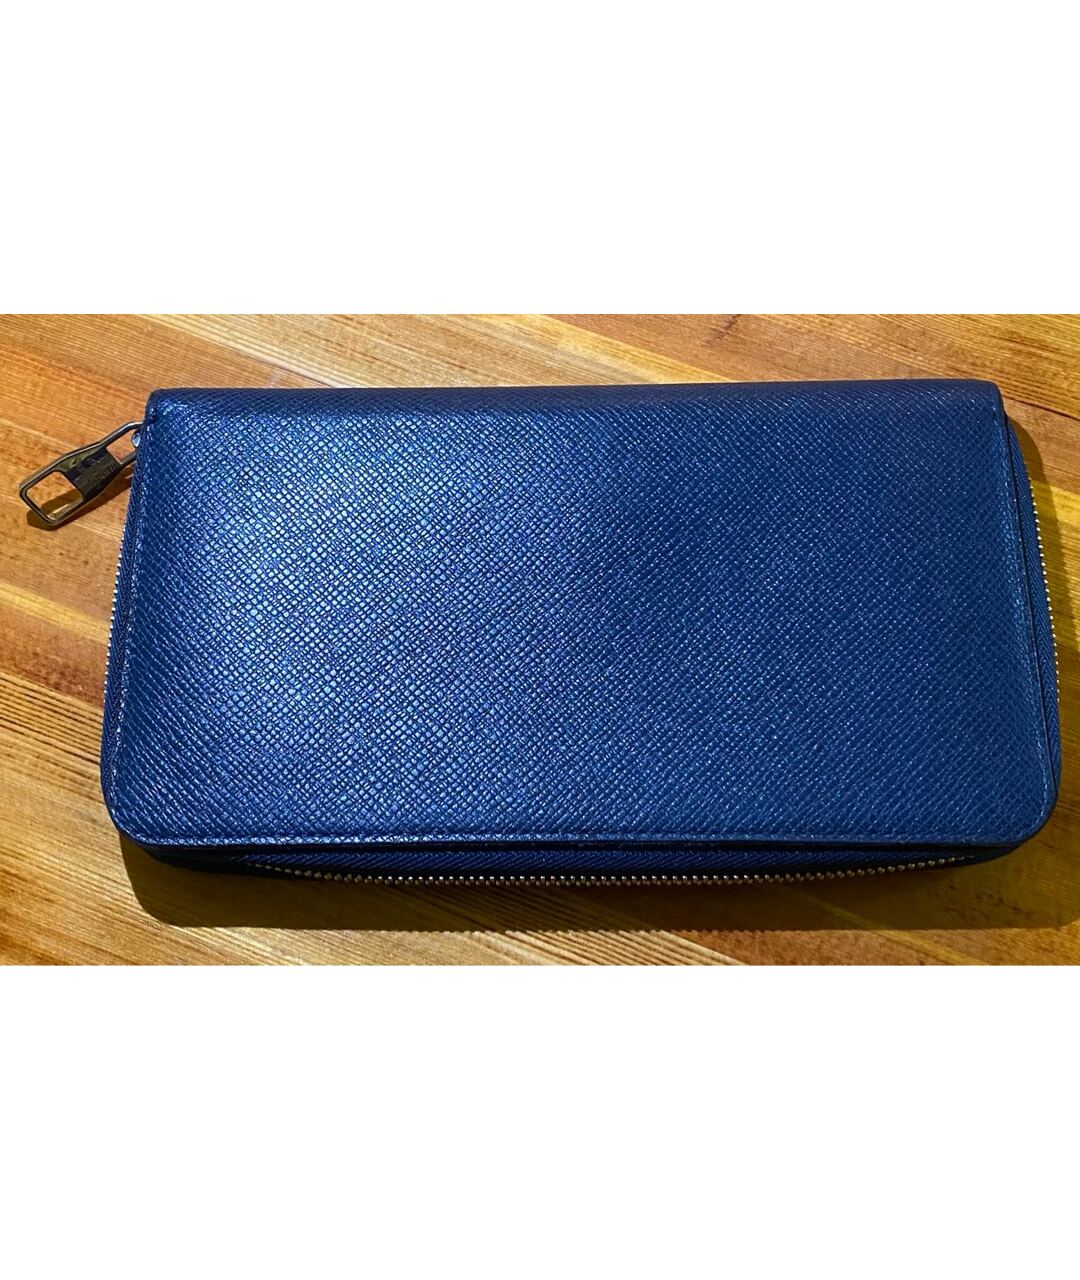 LOUIS VUITTON PRE-OWNED Синий кожаный кошелек, фото 2